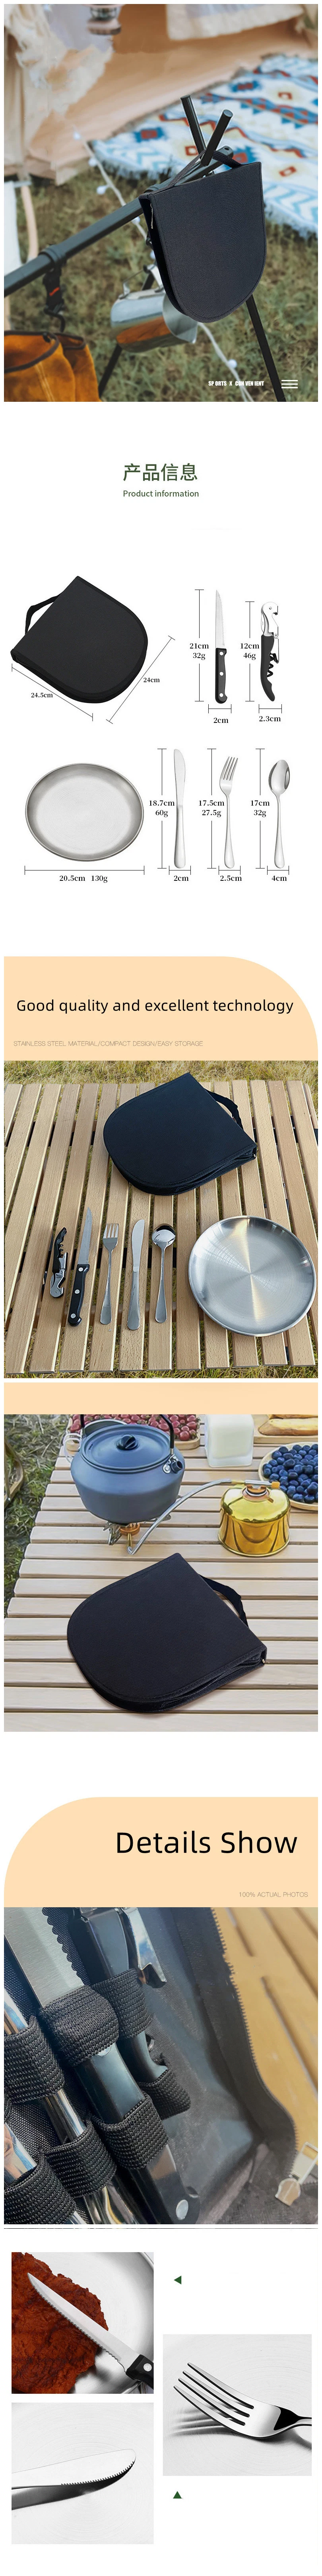 Stainless Steel Camping Picnic Tableware Bag Handbag Outdoor Cooking Portable Set